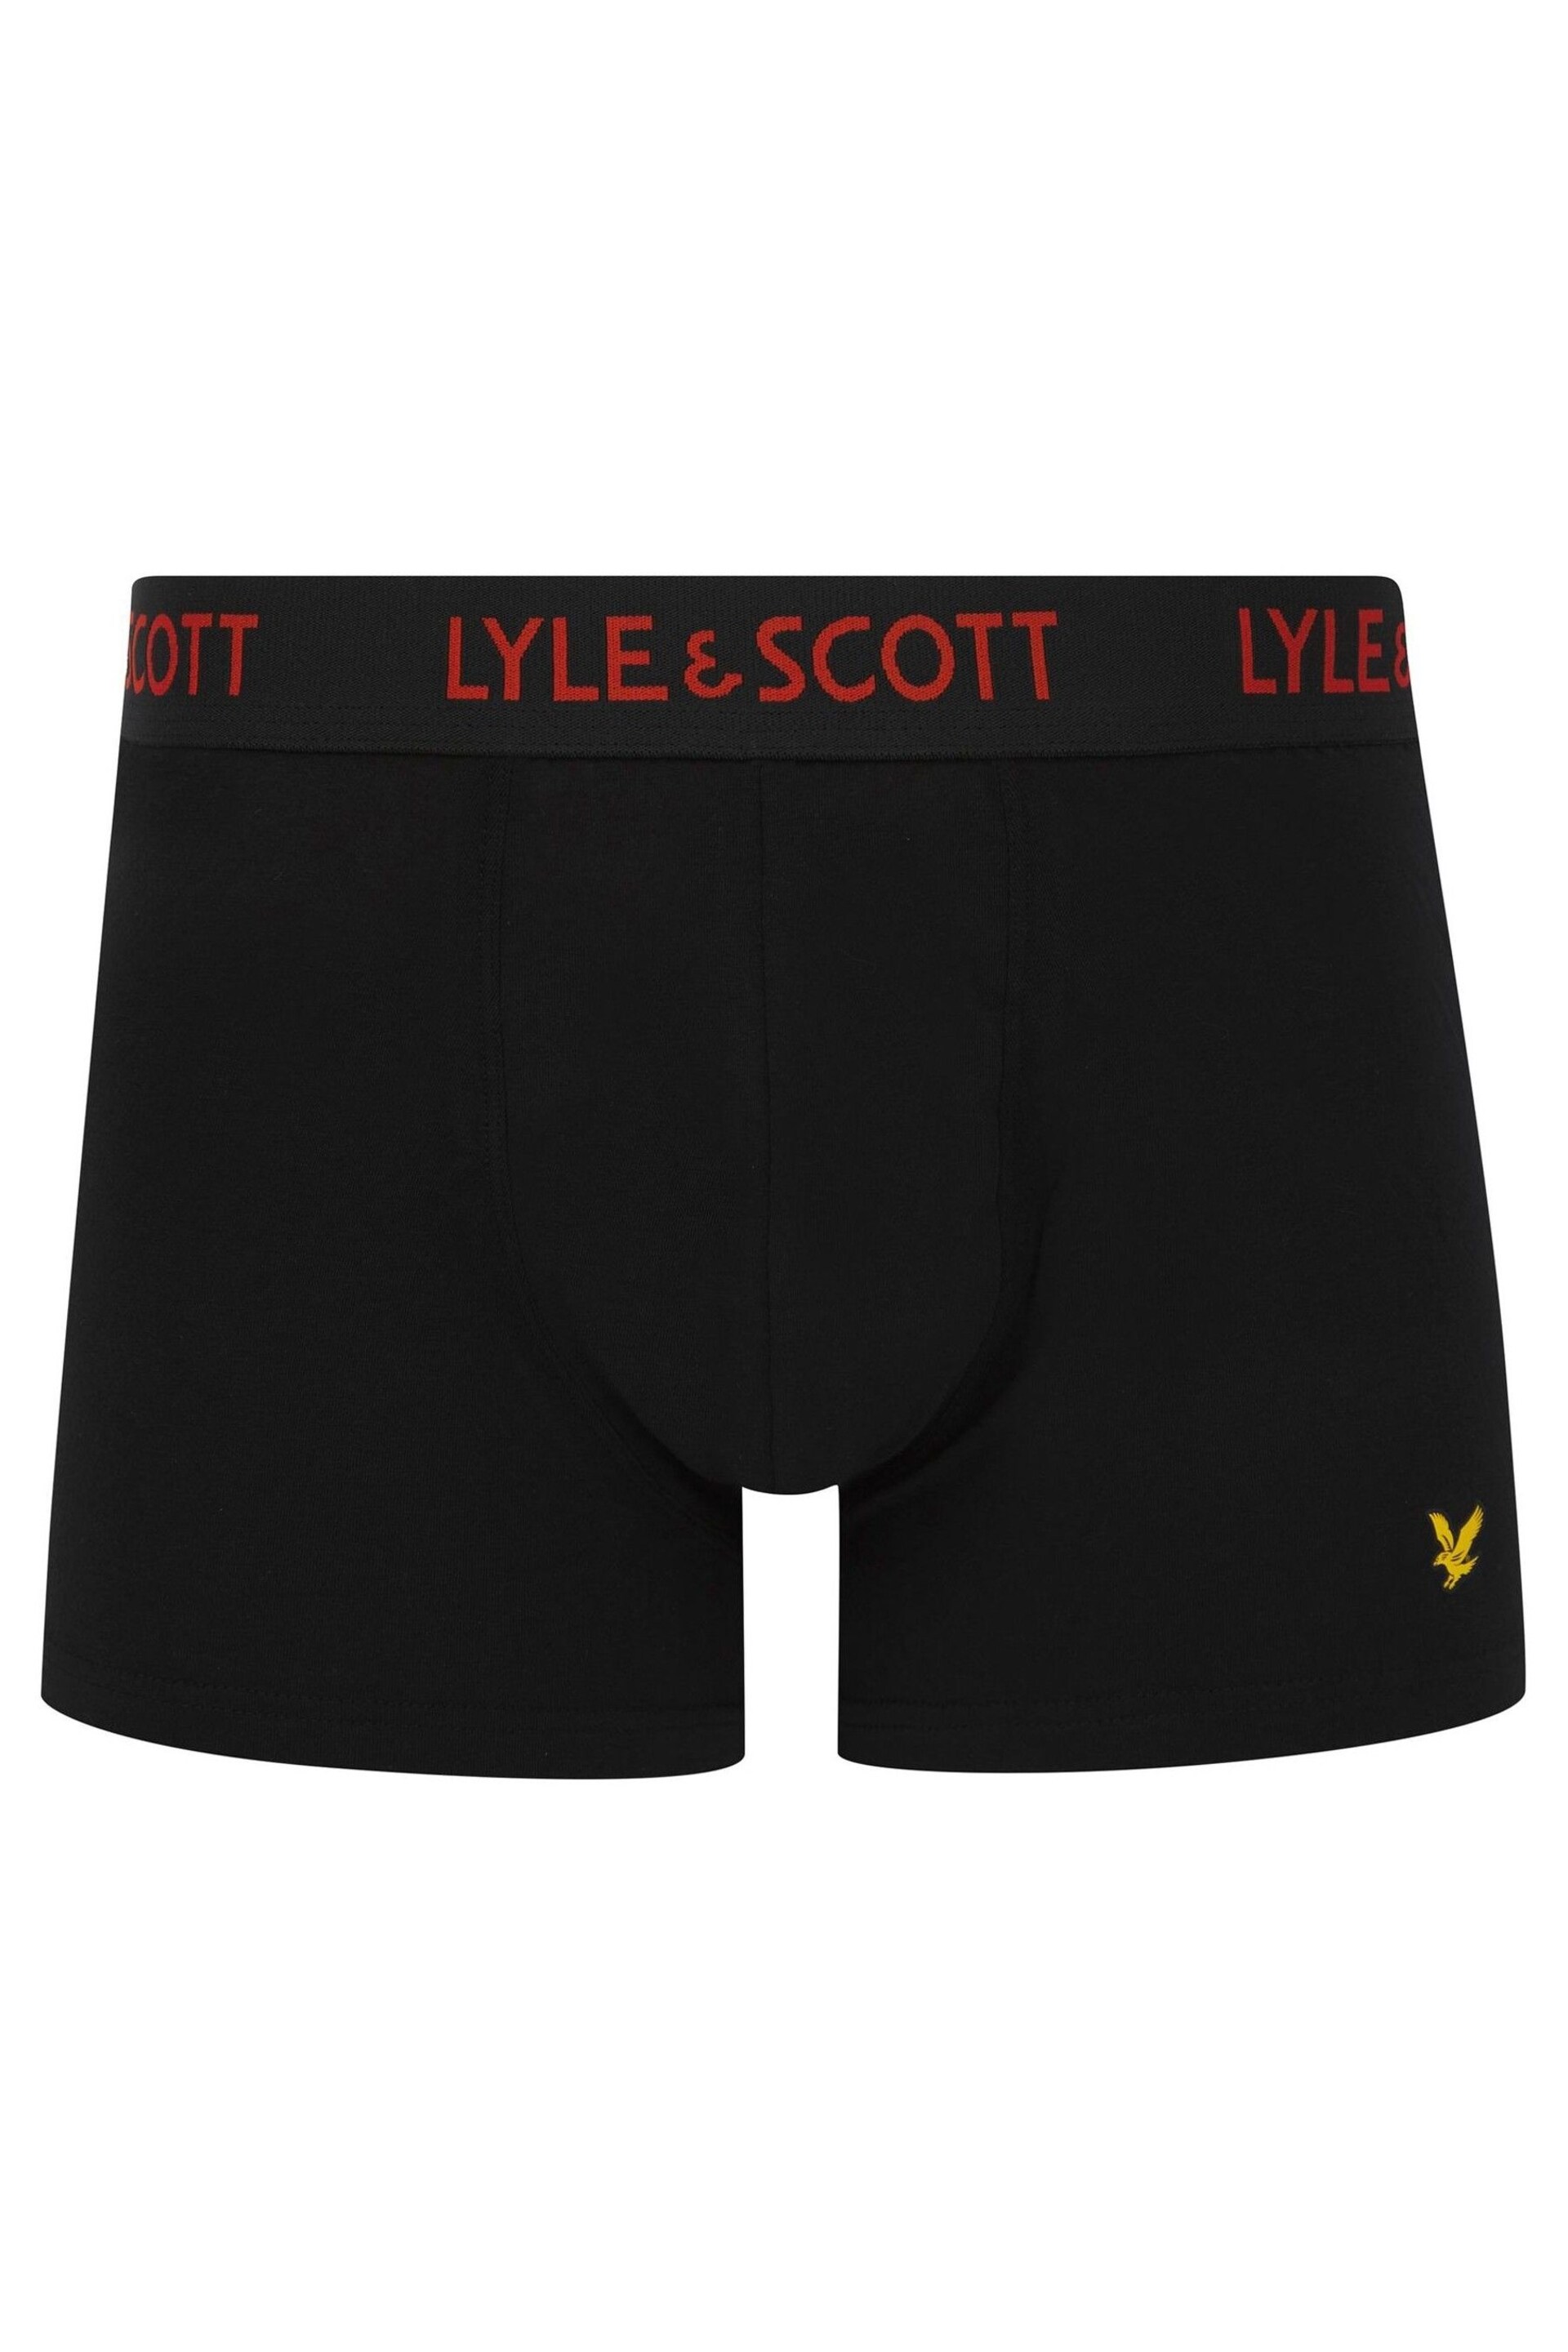 Lyle & Scott Barclay Underwear Black Trunks 3 Pack - Image 3 of 4